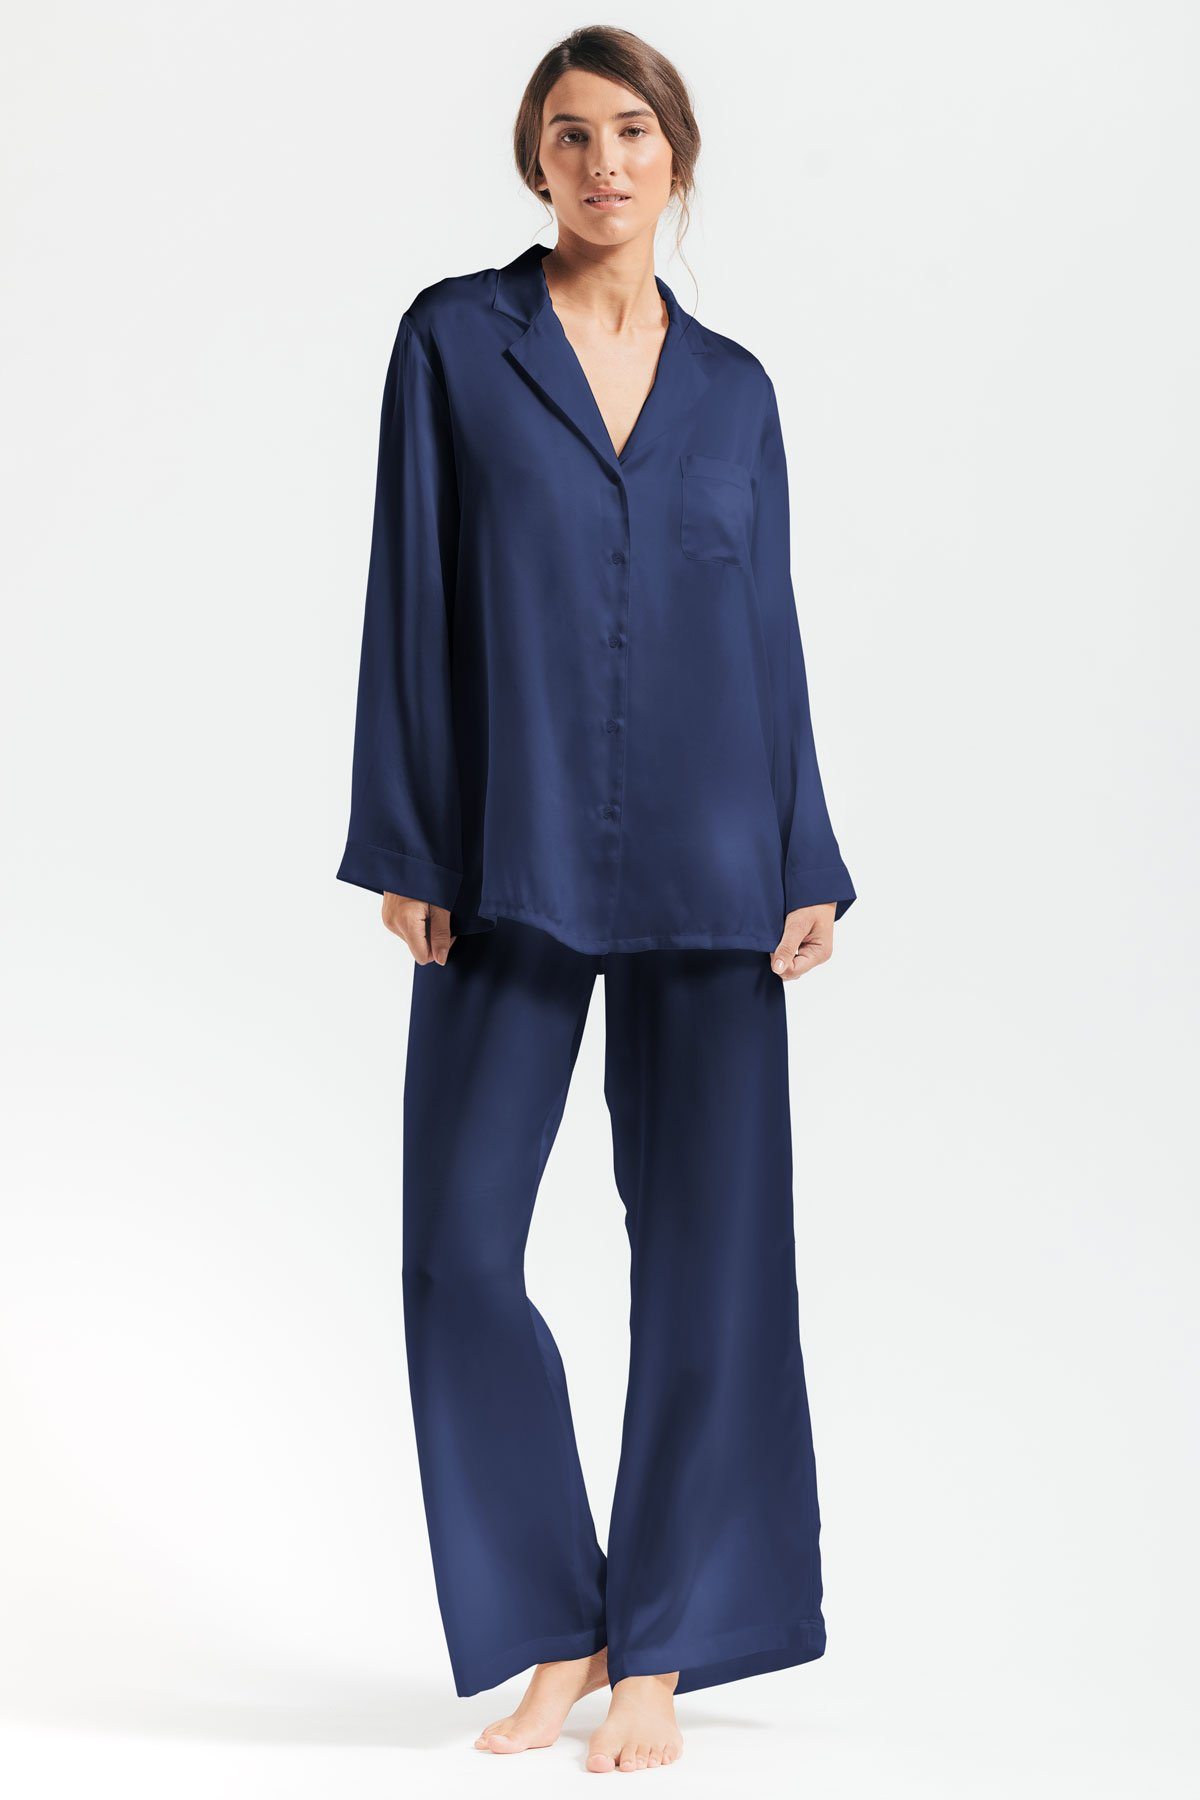 Model showcasing  Morgan Silk pajama set in evening-blue